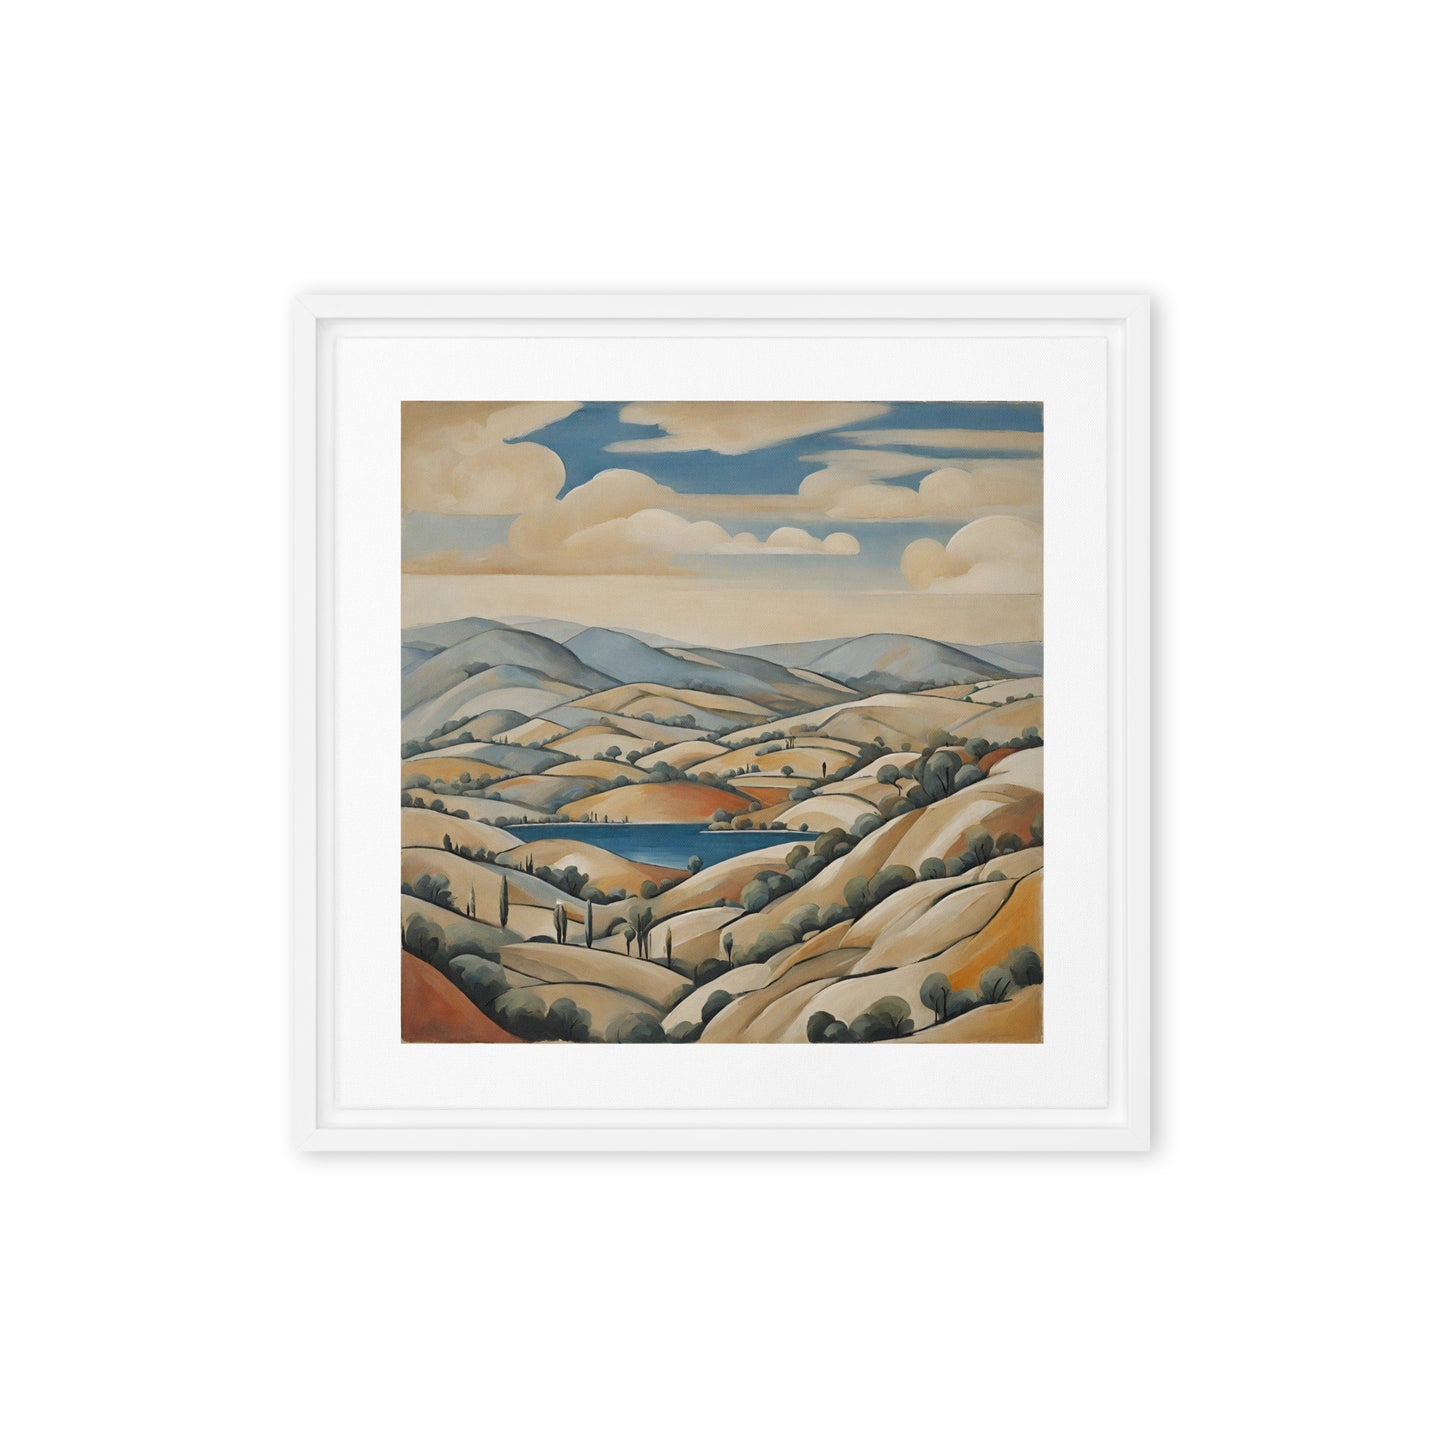 Spanish hills - Framed canvas